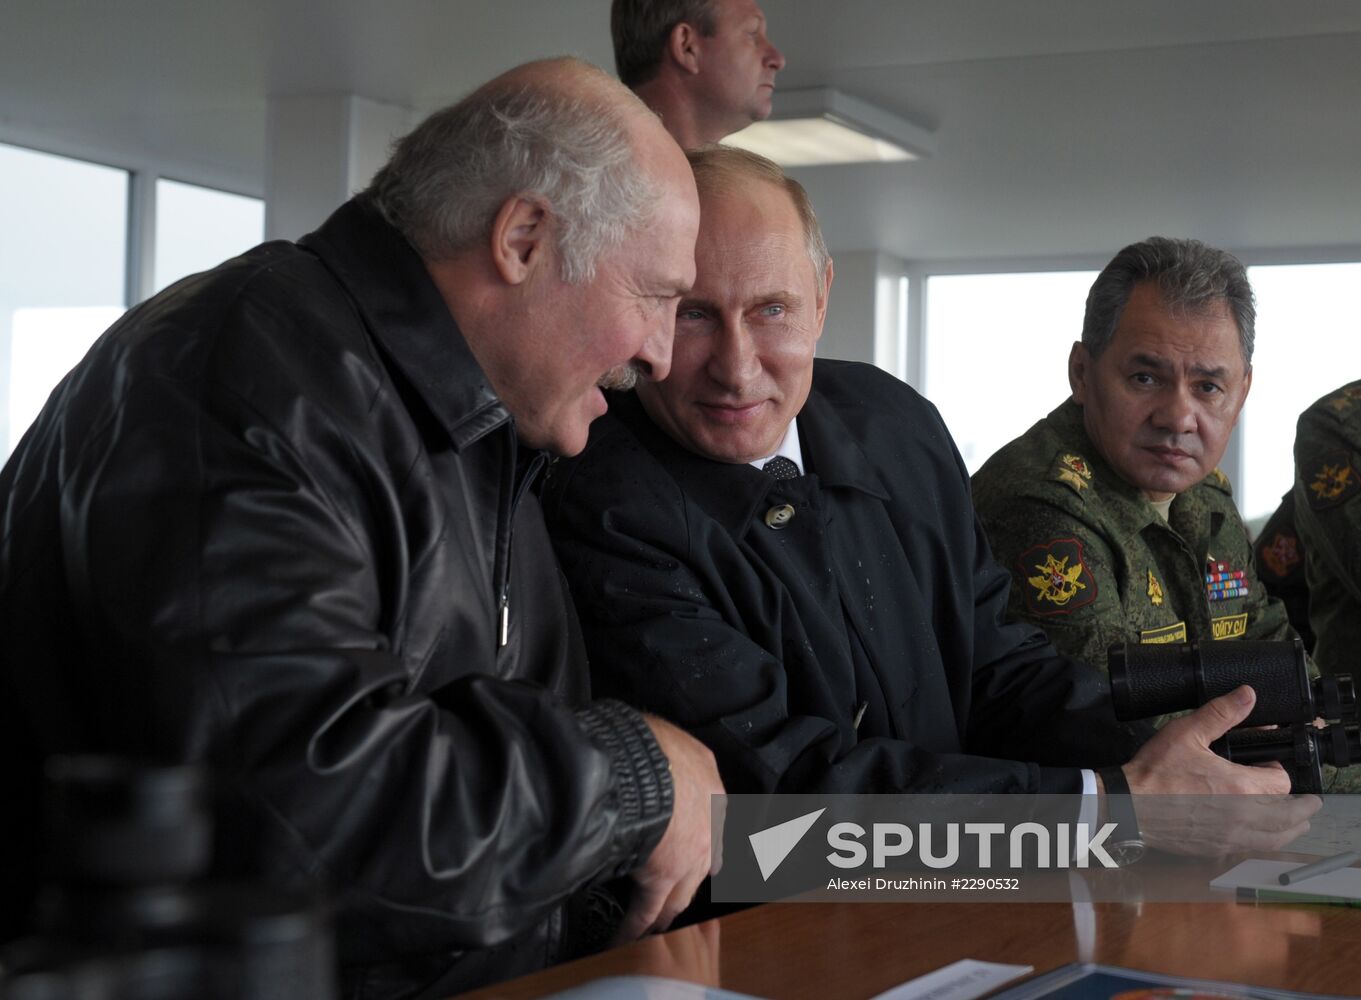 Vladimir Putin's working visit to Kaliningrad Region